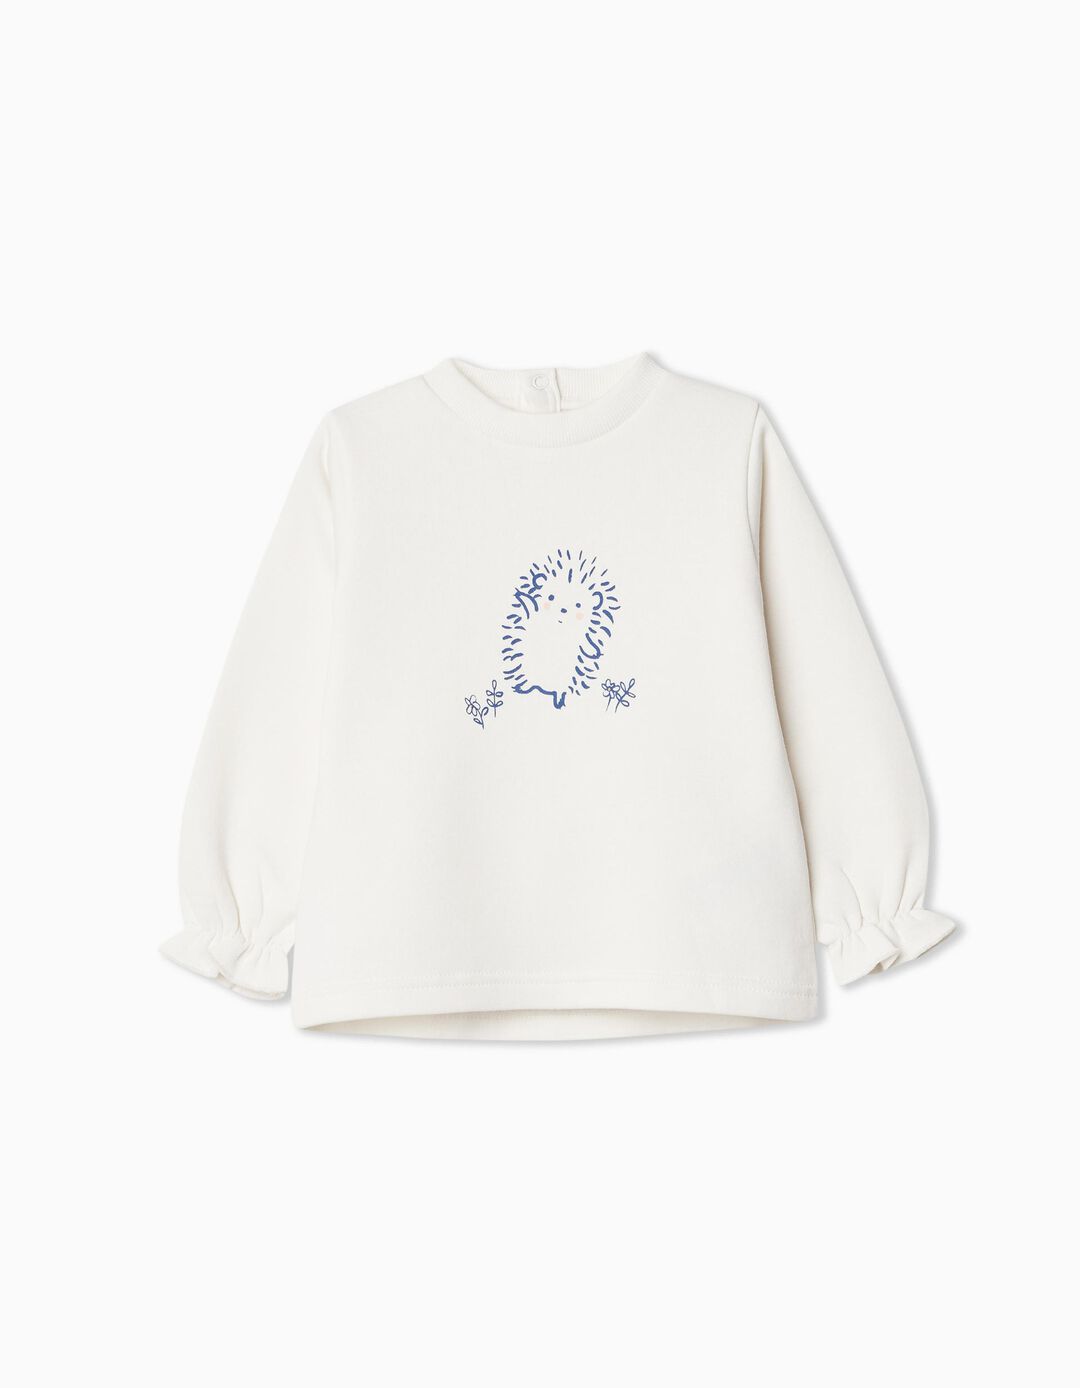 Sweatshirt de Felpa, Bebé Menina, Branco